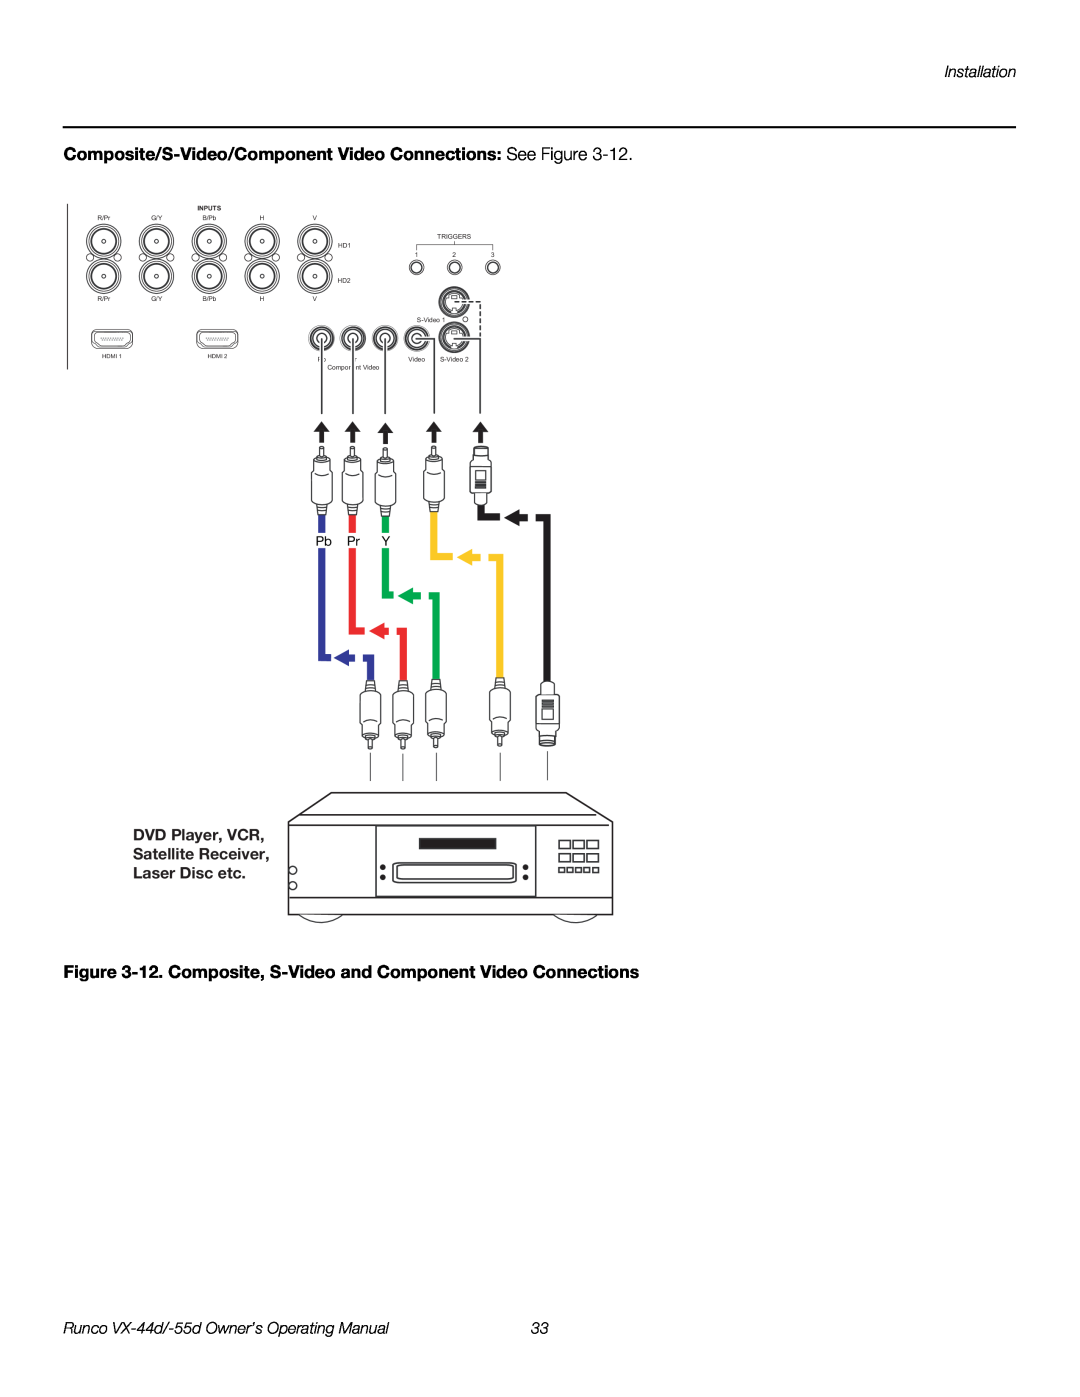 Runco VX-55D, VX-44D manual Composite/S-Video/Component Video Connections See Figure, Installation, Pb Pr Y, Inputs 